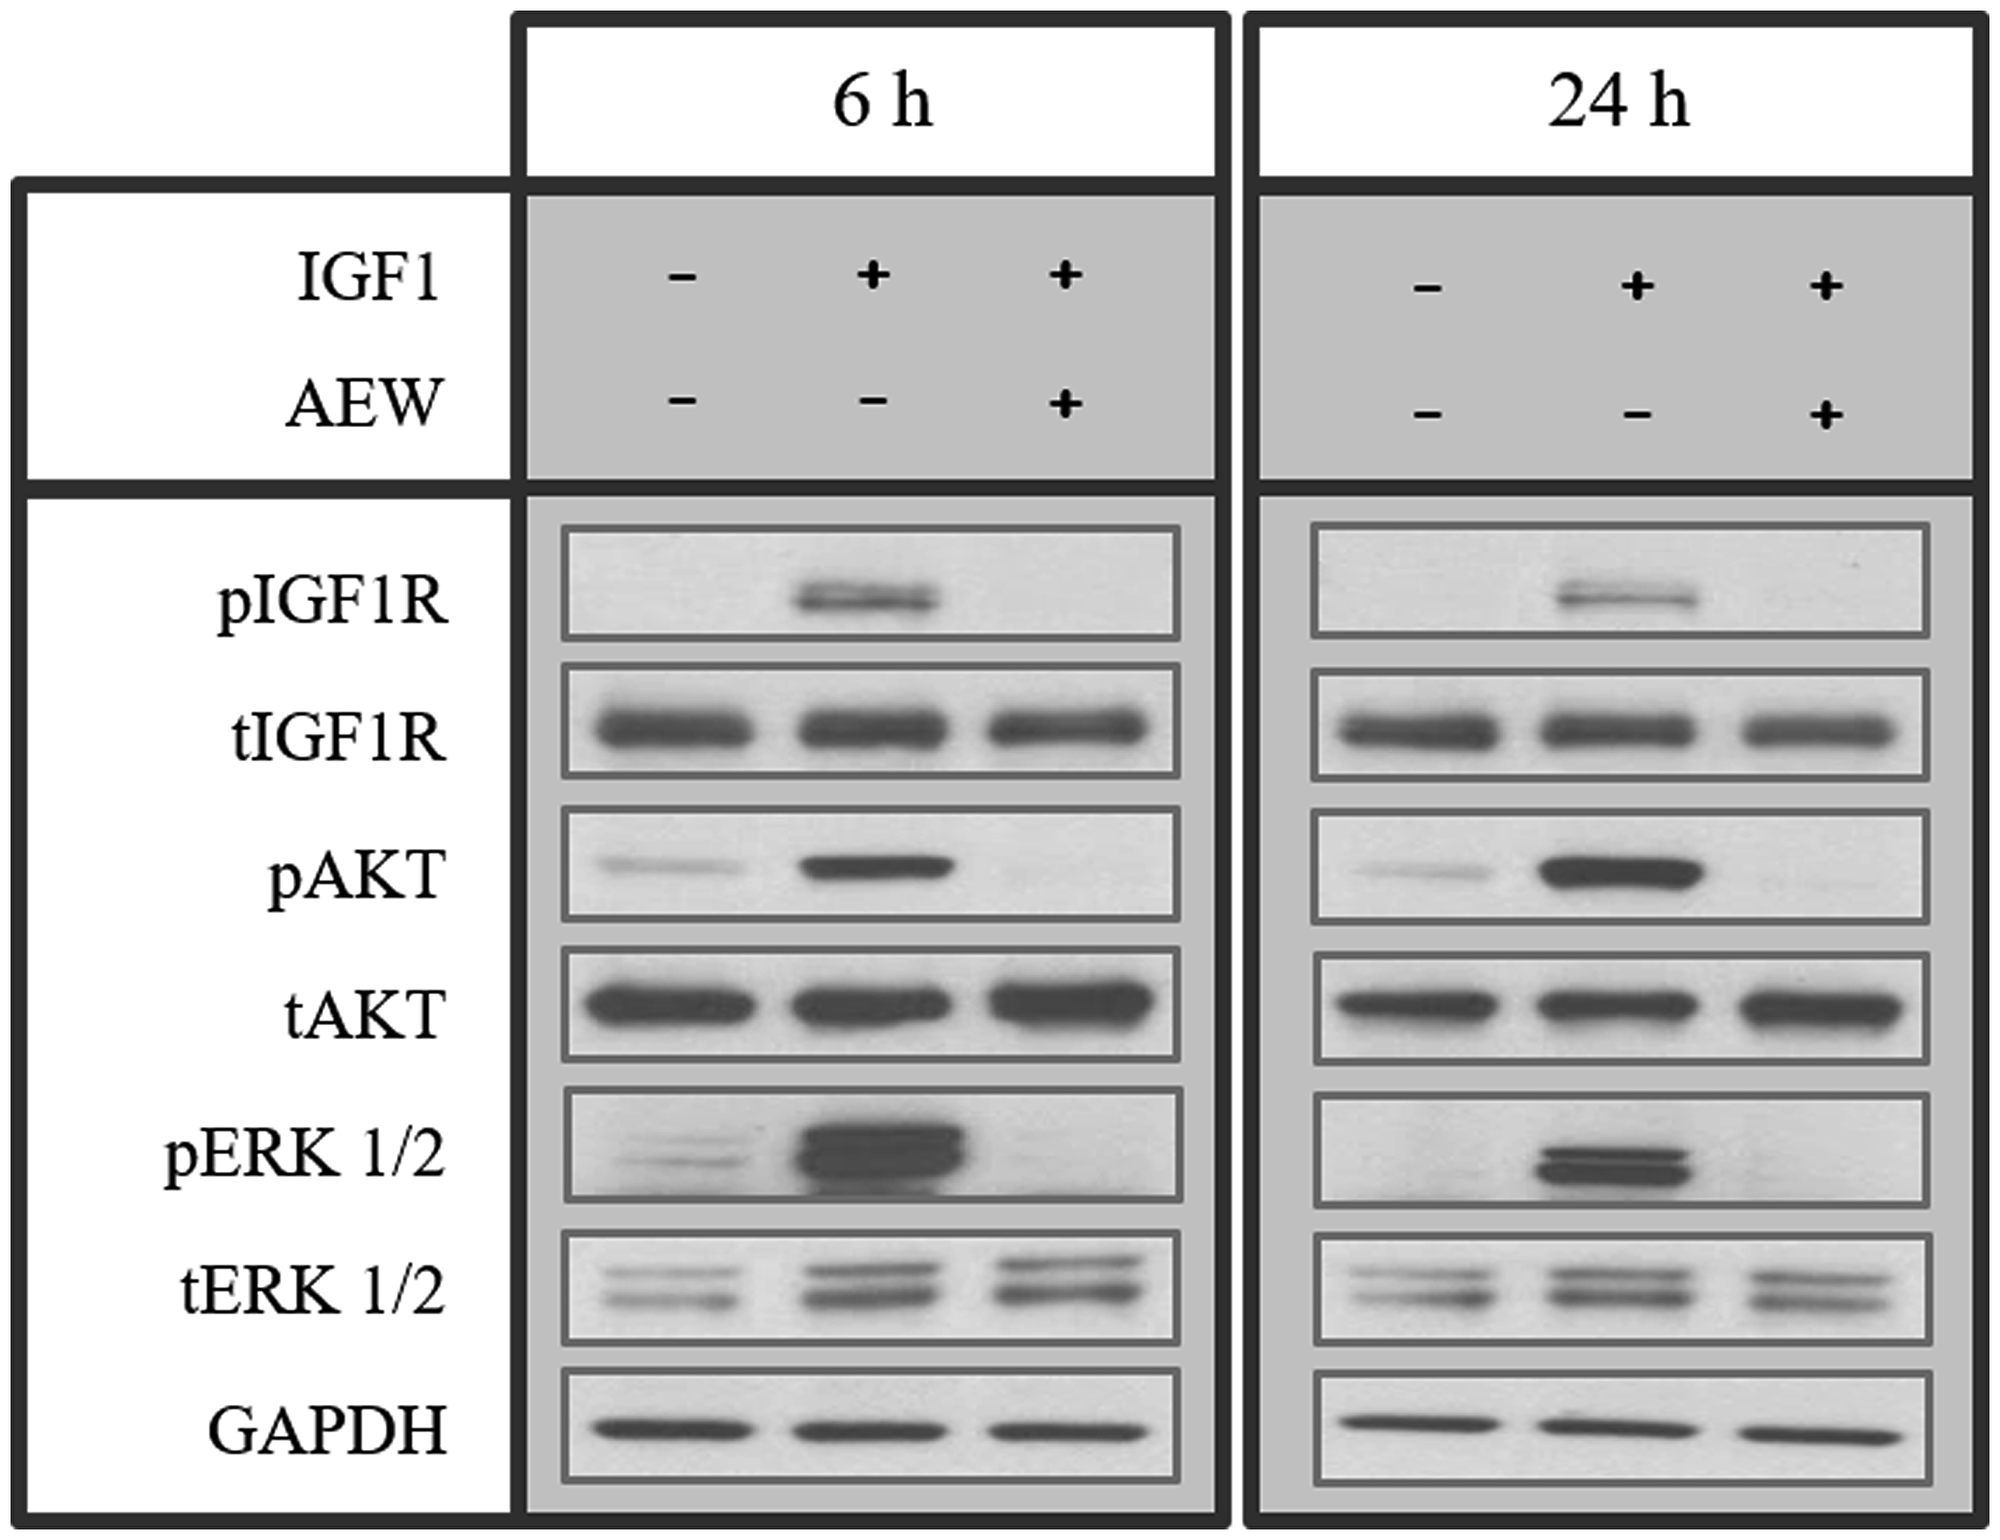 Effect of AEW541 on IGF1-mediated signaling.